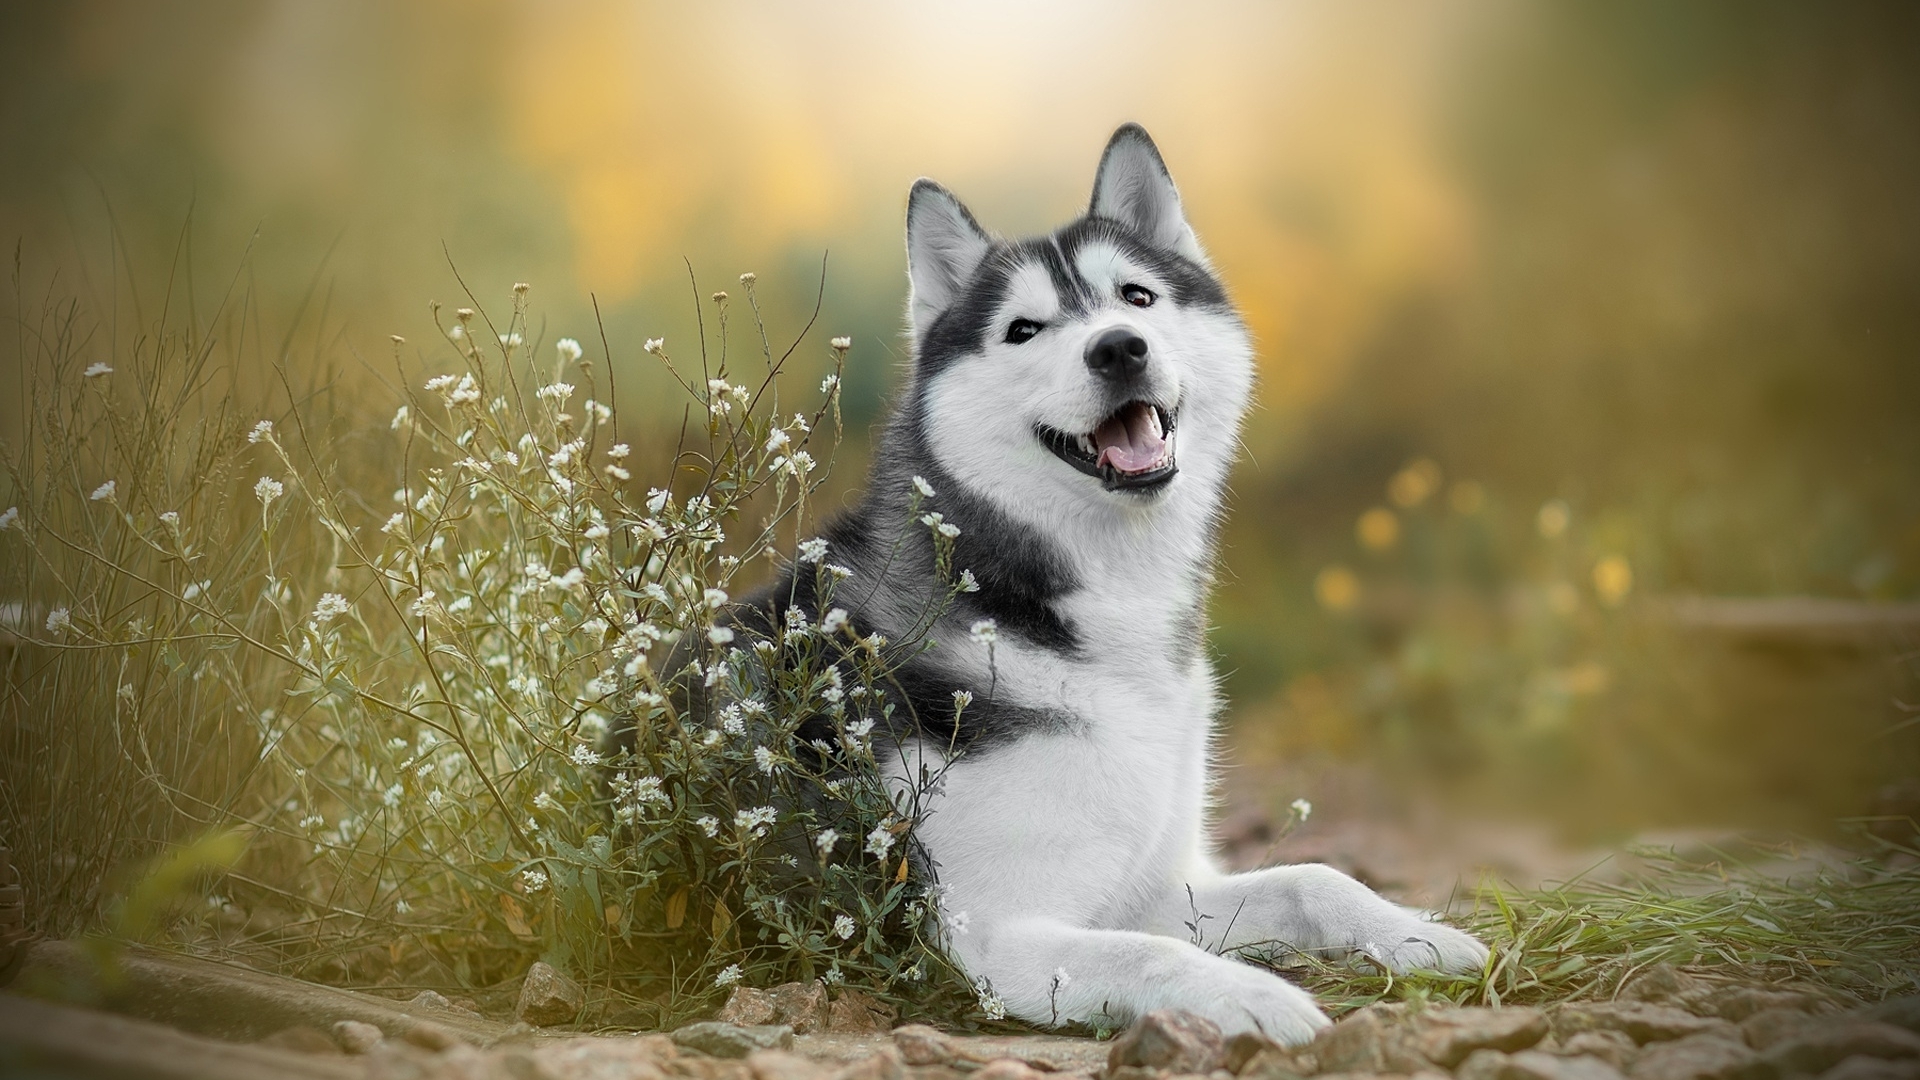 Image: Husky, dog, breed, joy, flowers, field, grass